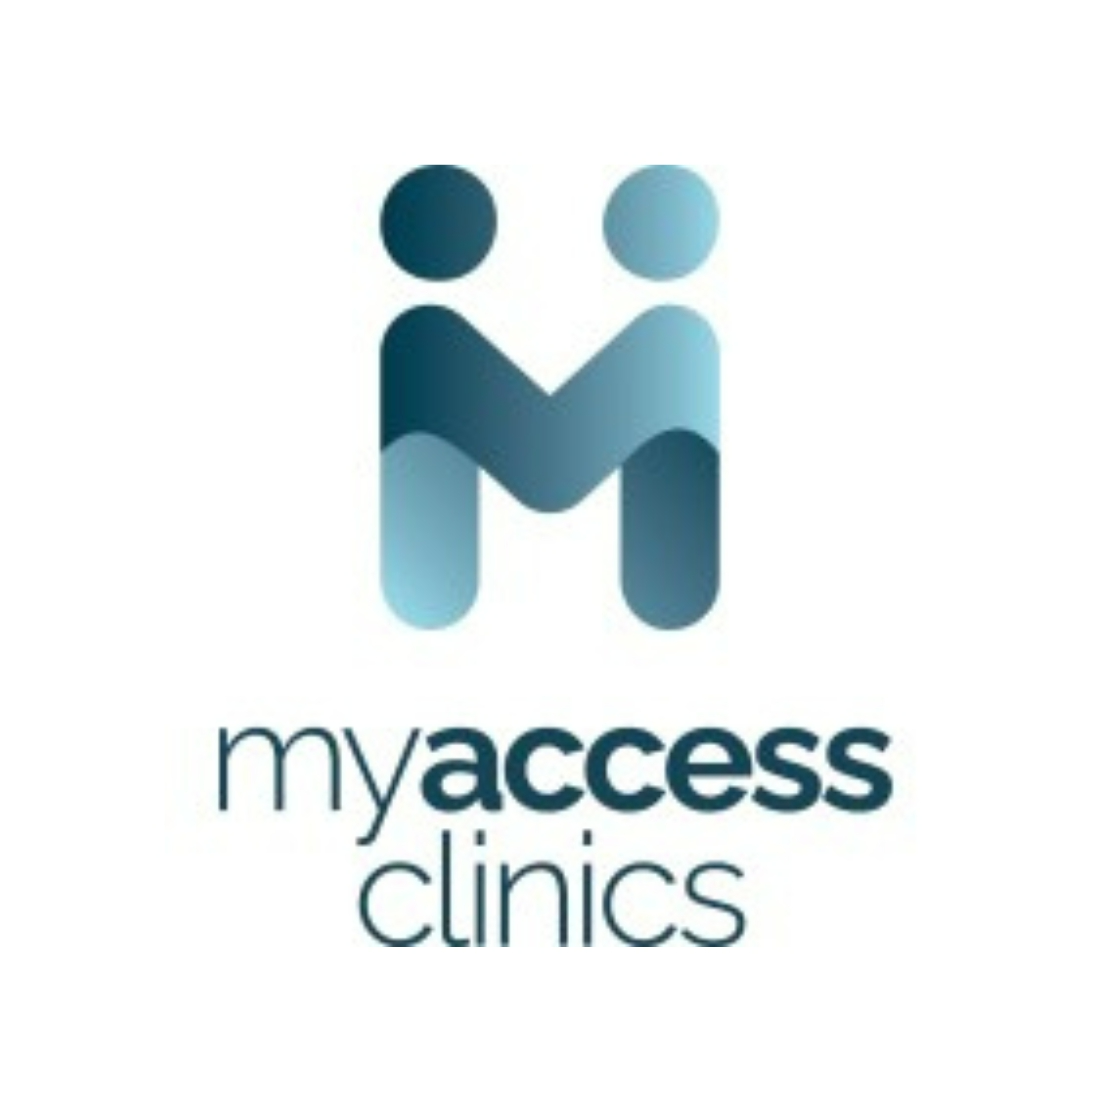 MyAccess Clinics